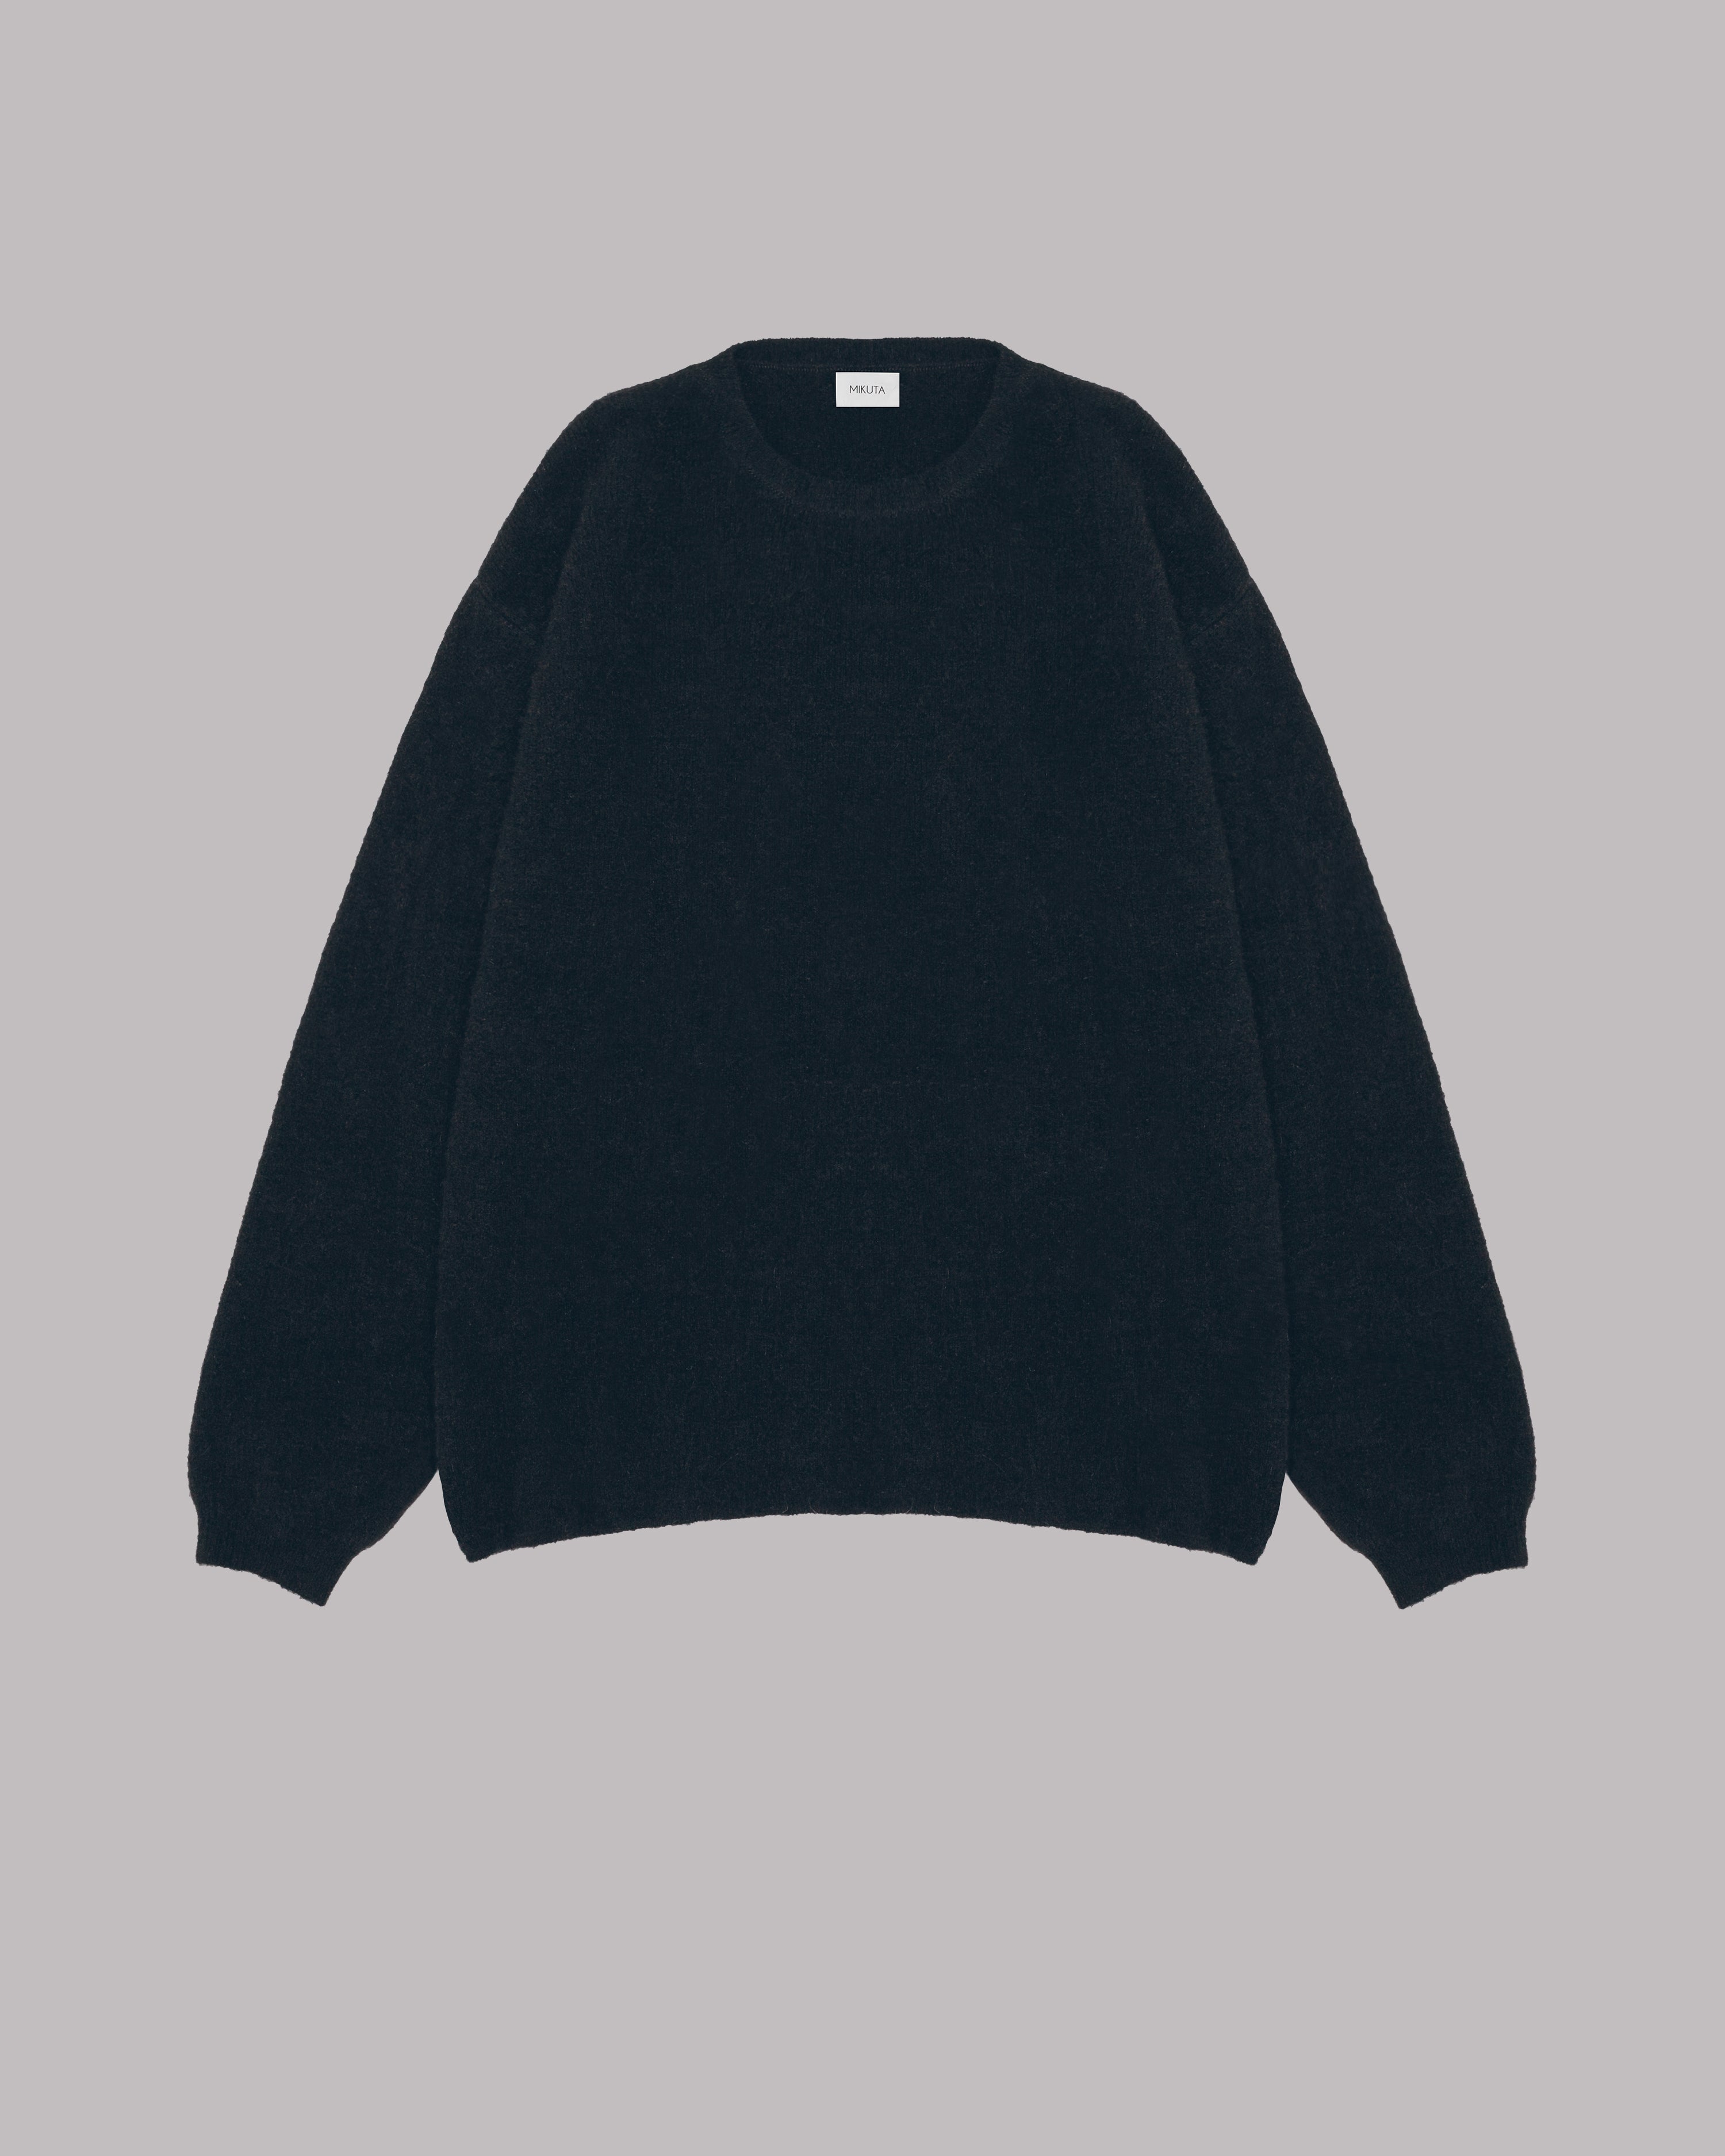 The Black Oversized Knitted Sweater – MIKUTA